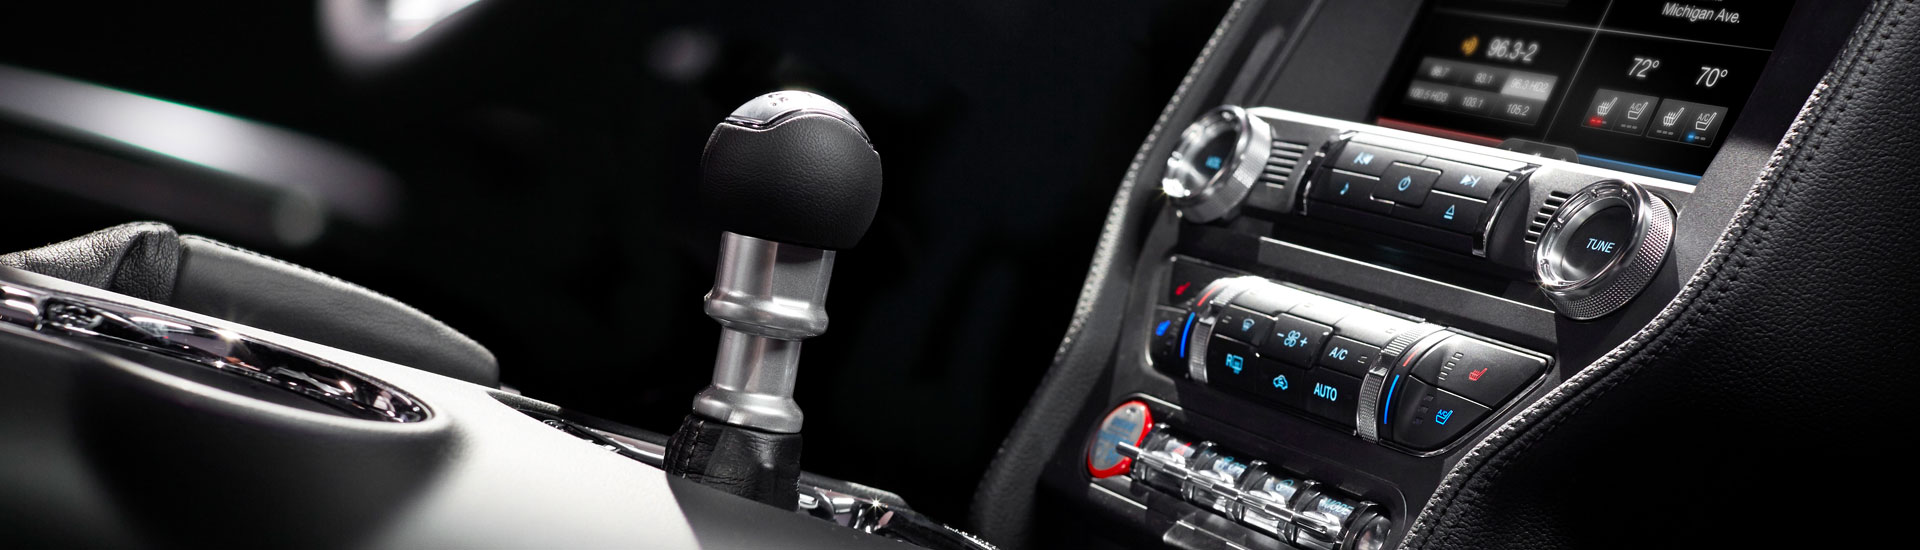 2016 Aston Martin V8 Vantage Custom Dash Kits